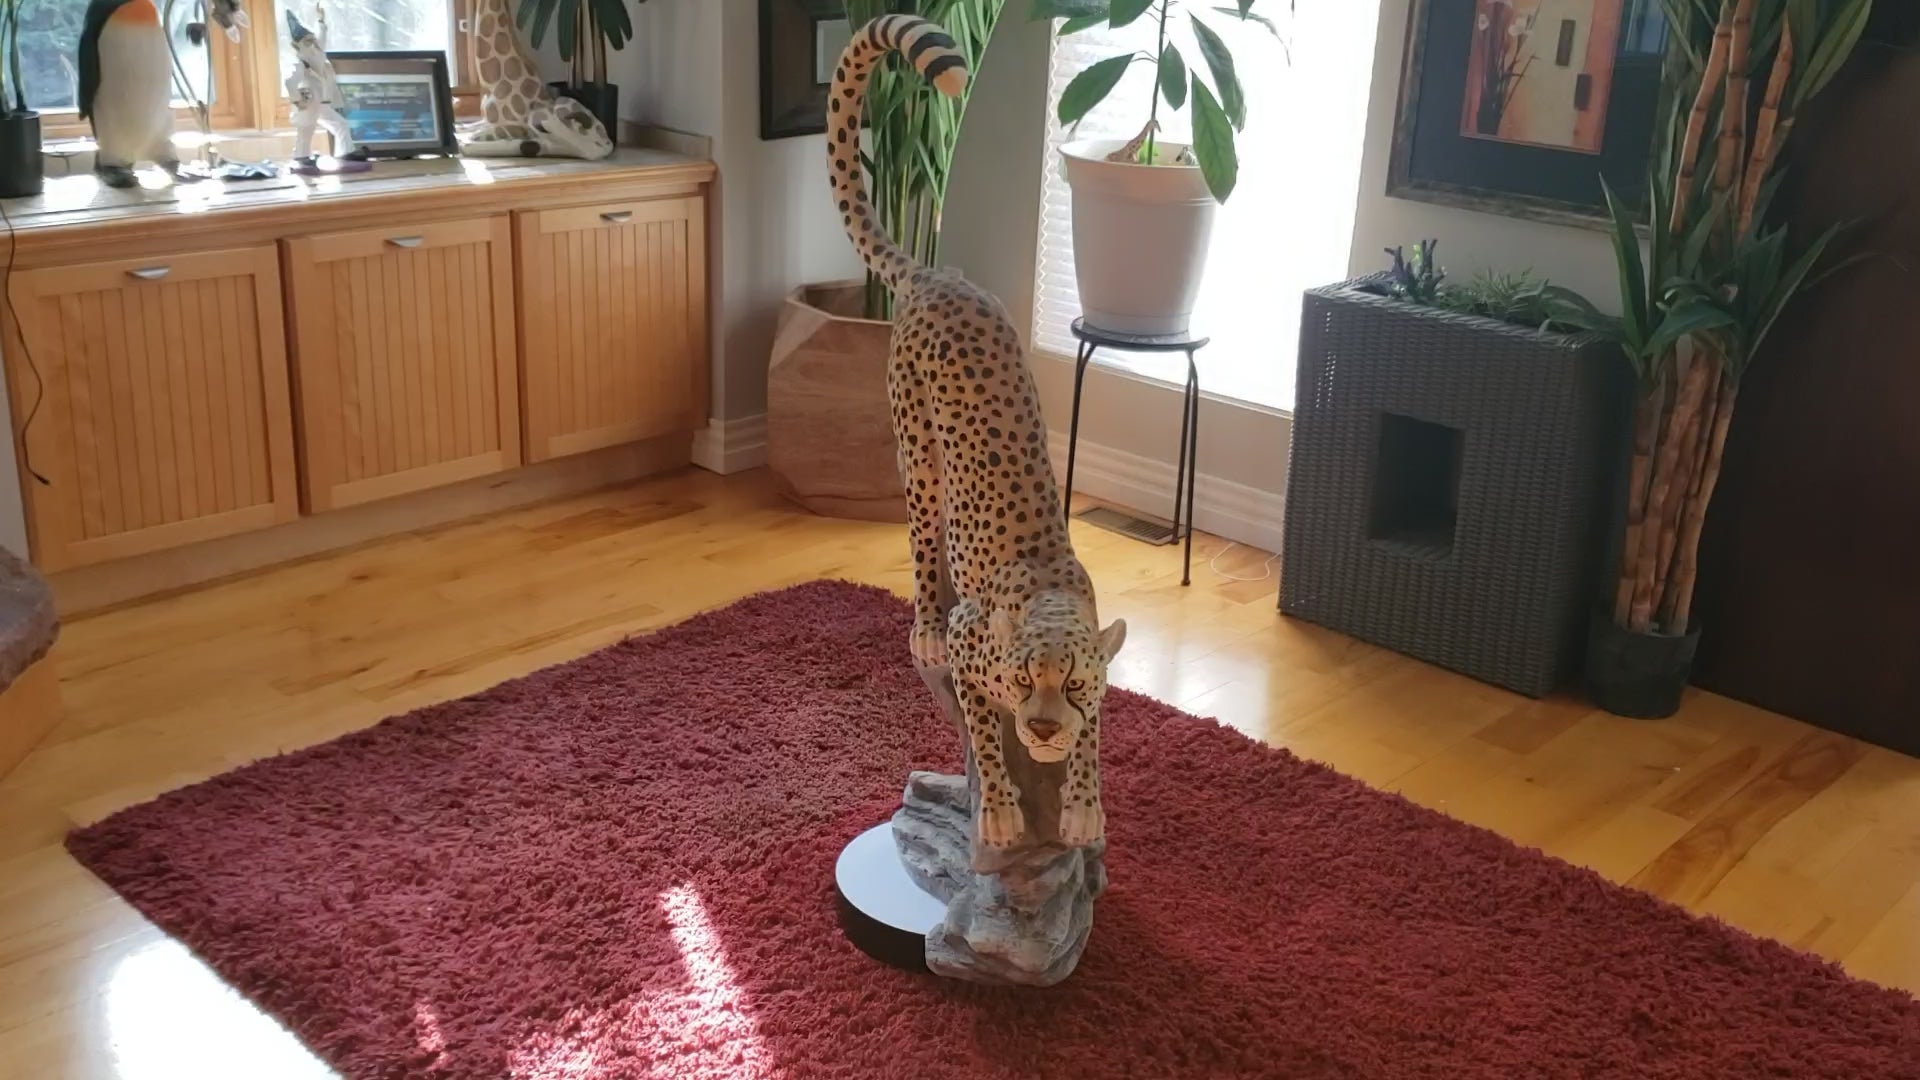 Auction for sale cheetah statue